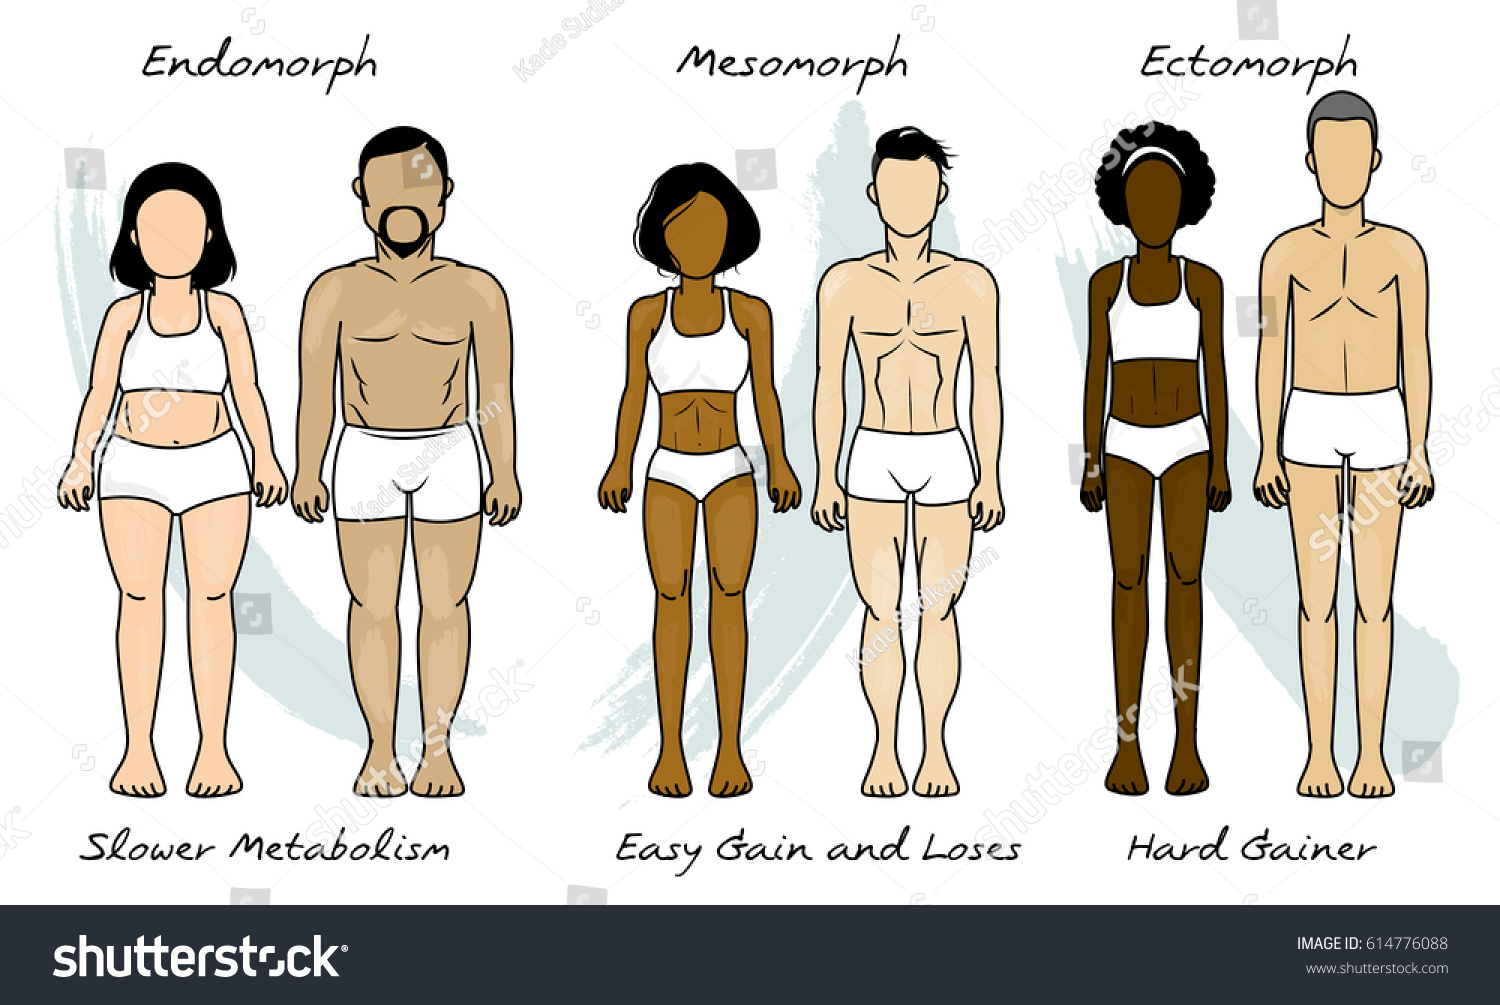 Opinion vavavoom types body mesomorph endomorph bodycon on dress different ectomorph usa online